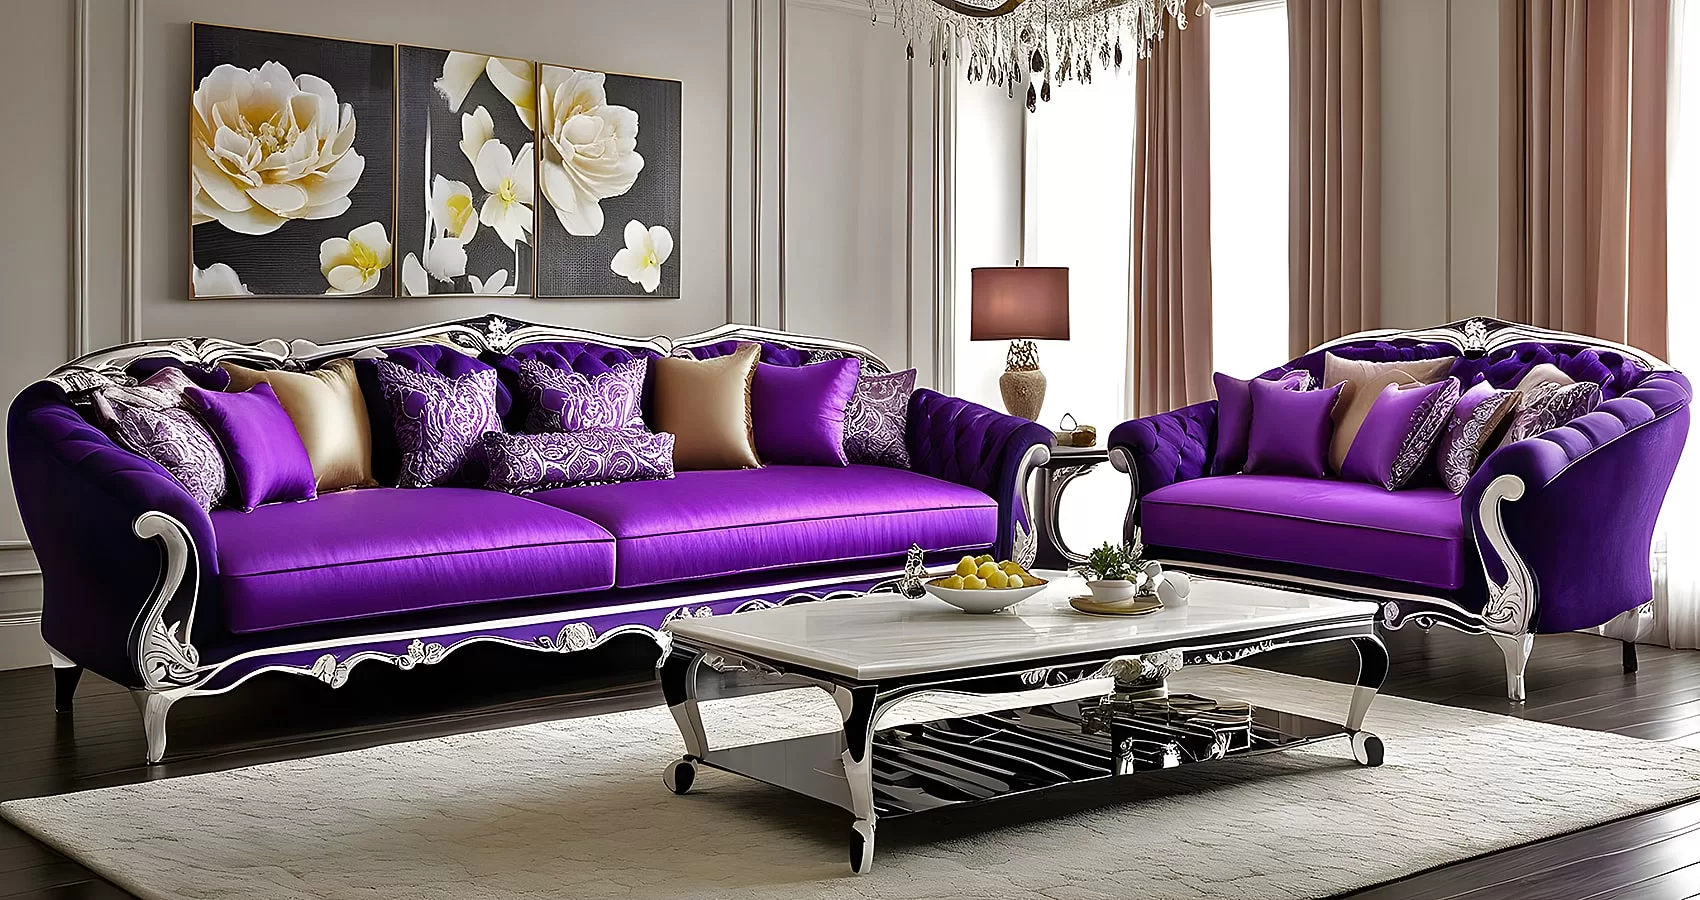 Purple Couch Pillows | Purple Sofa Pillows